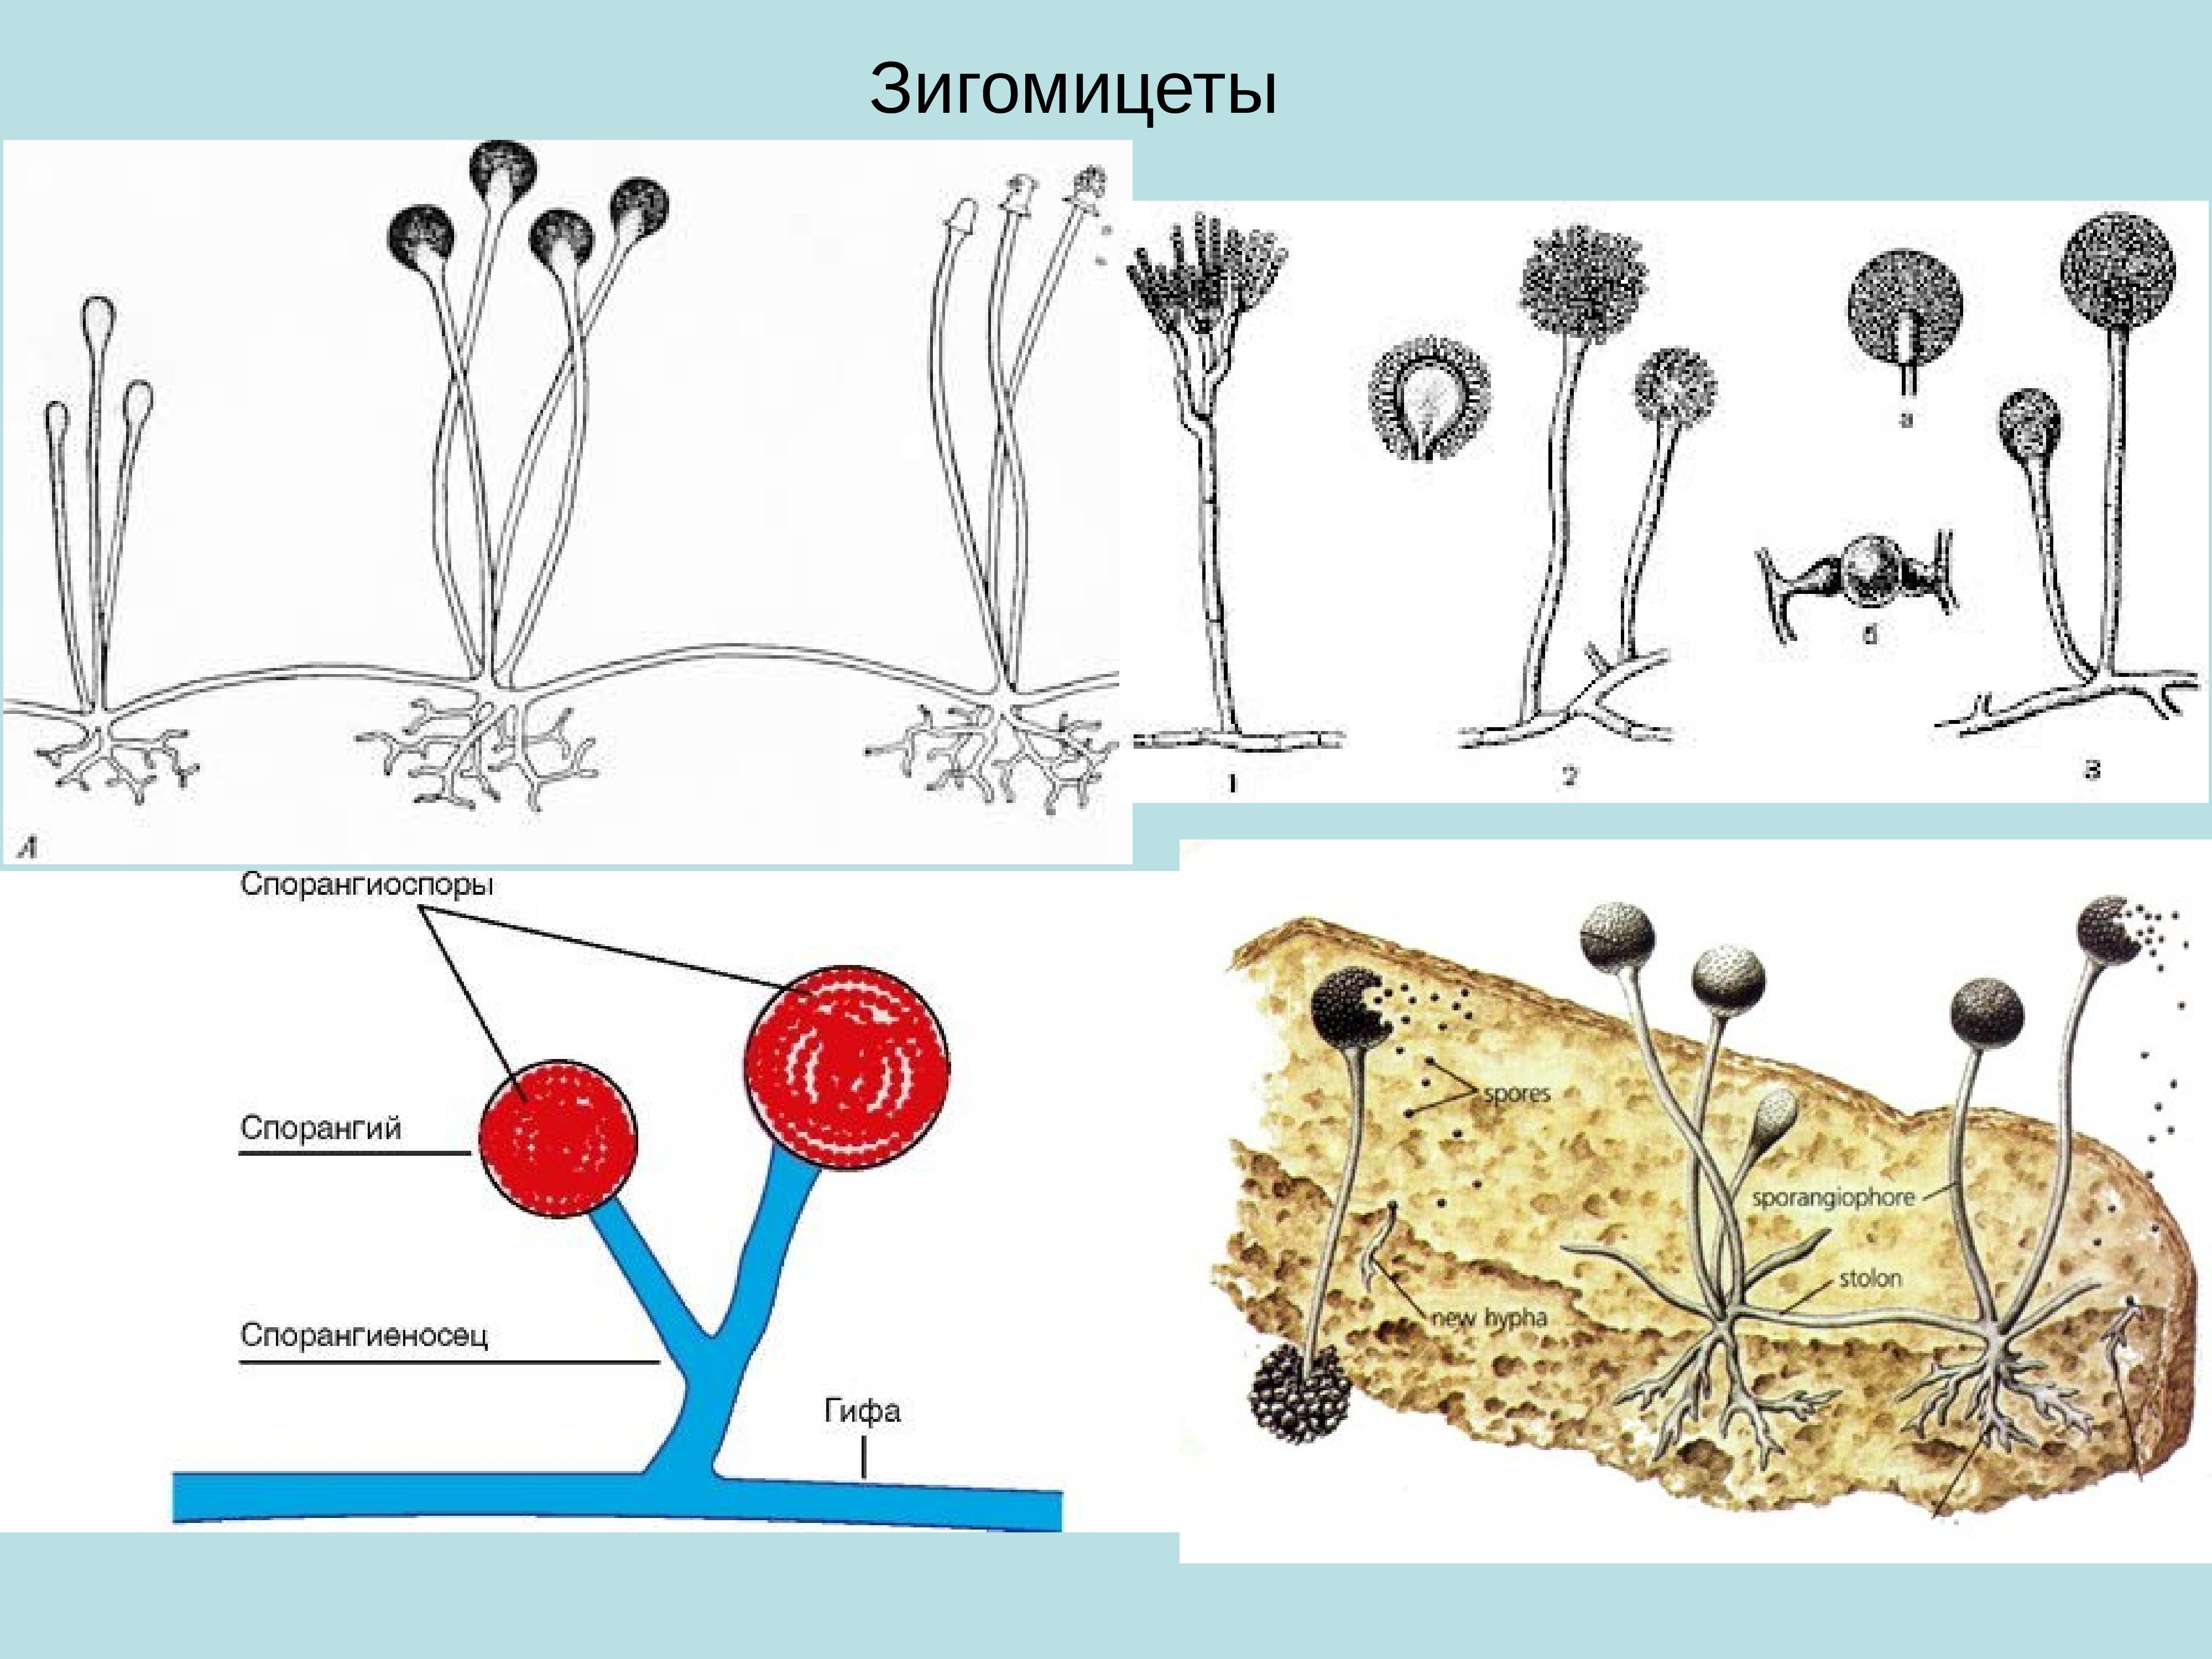 Мукор царство. Зигомицеты строение мицелия. Зигомицеты грибы представители. Строение гриба рода Mucor. Зигомицеты строение тела.